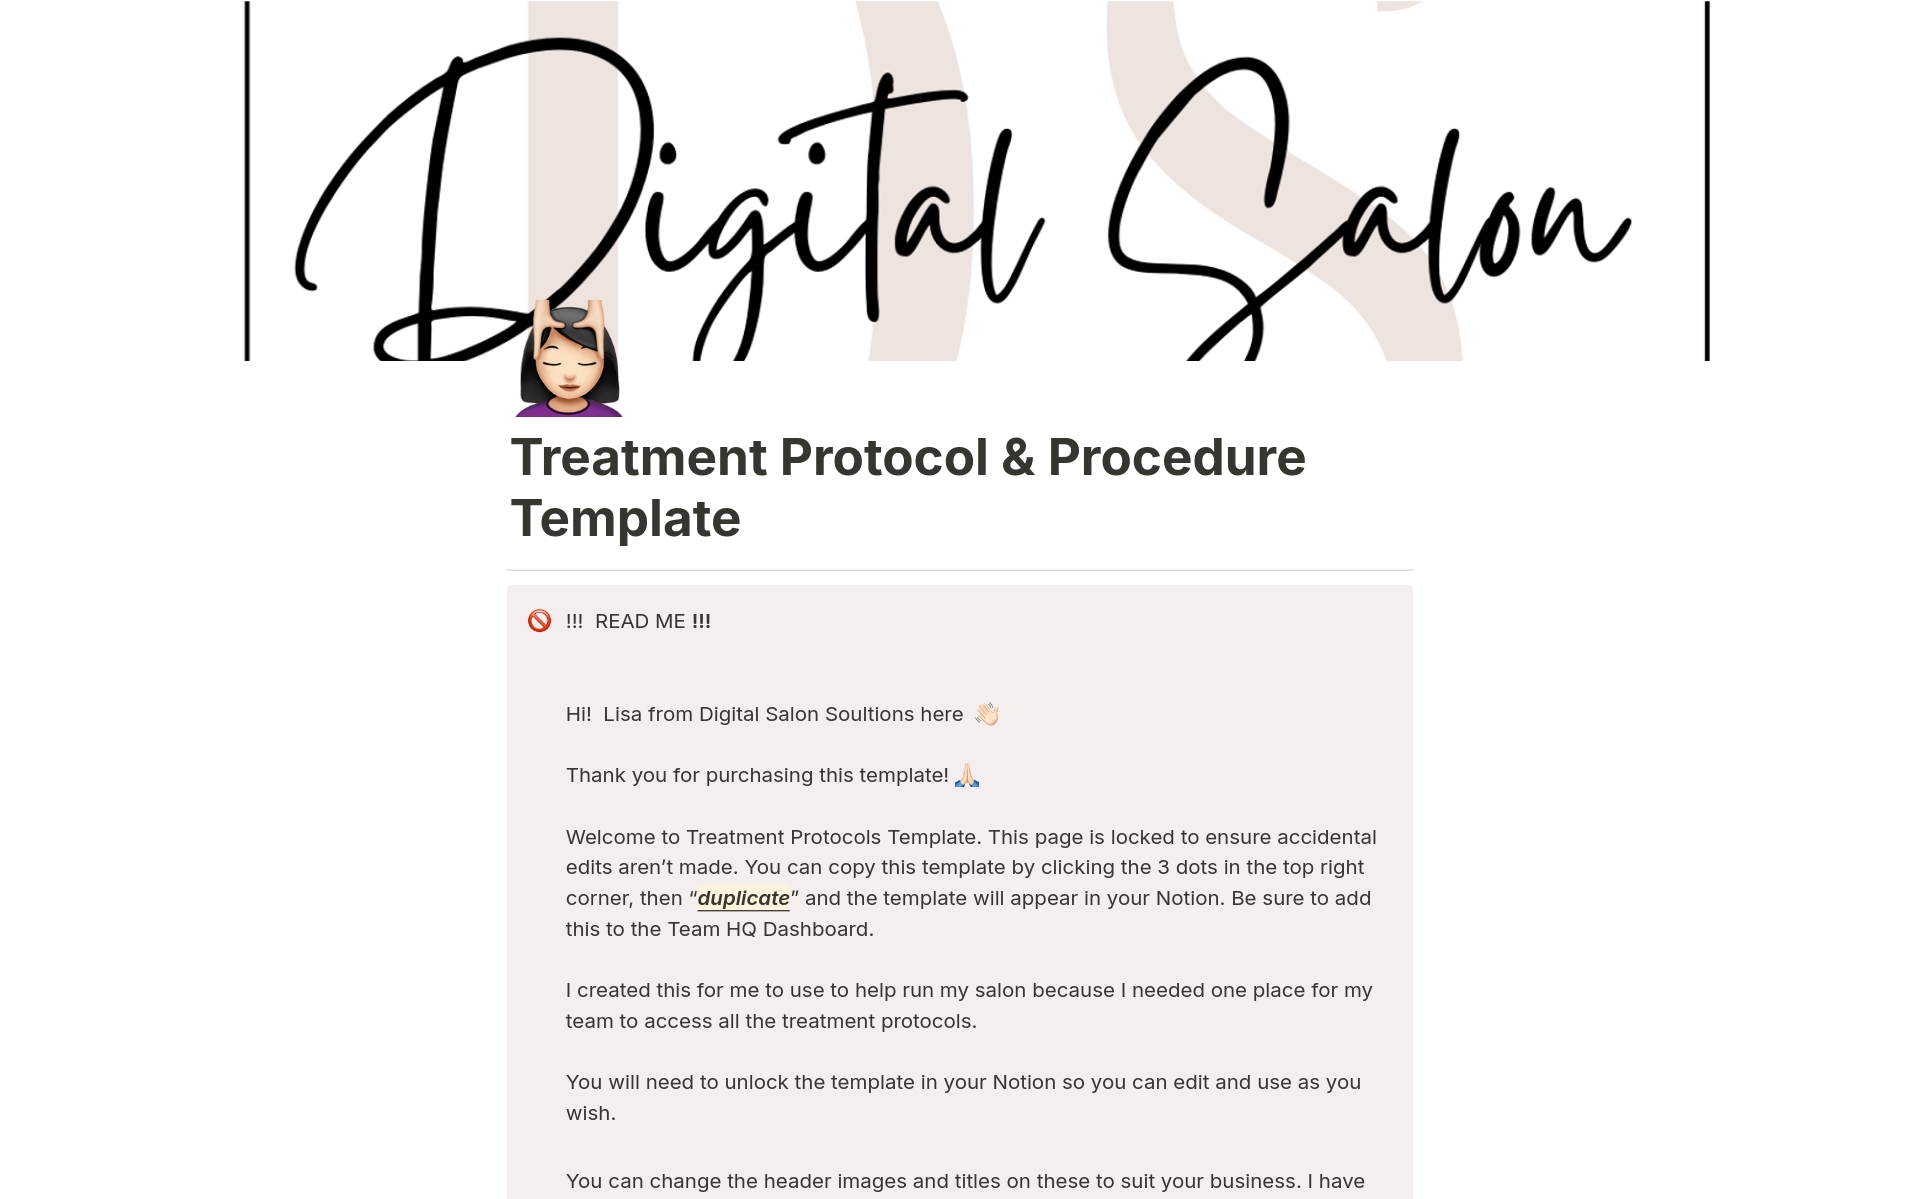 Treatment Protocol & Procedure Template님의 템플릿 미리보기